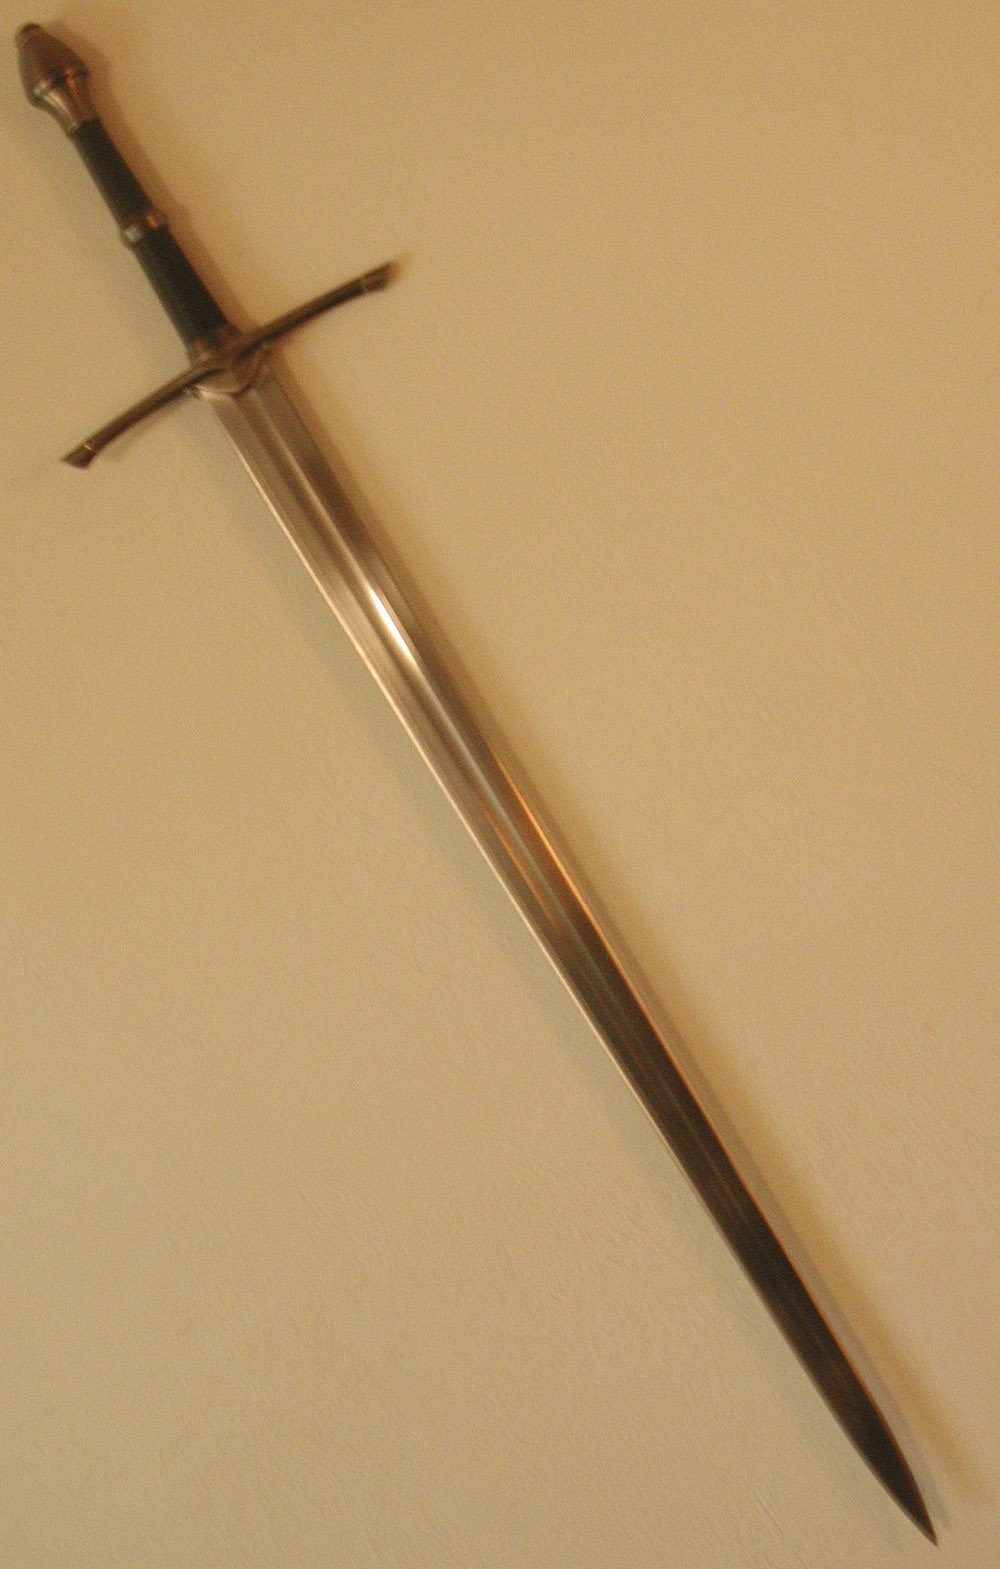 Strider's Sword